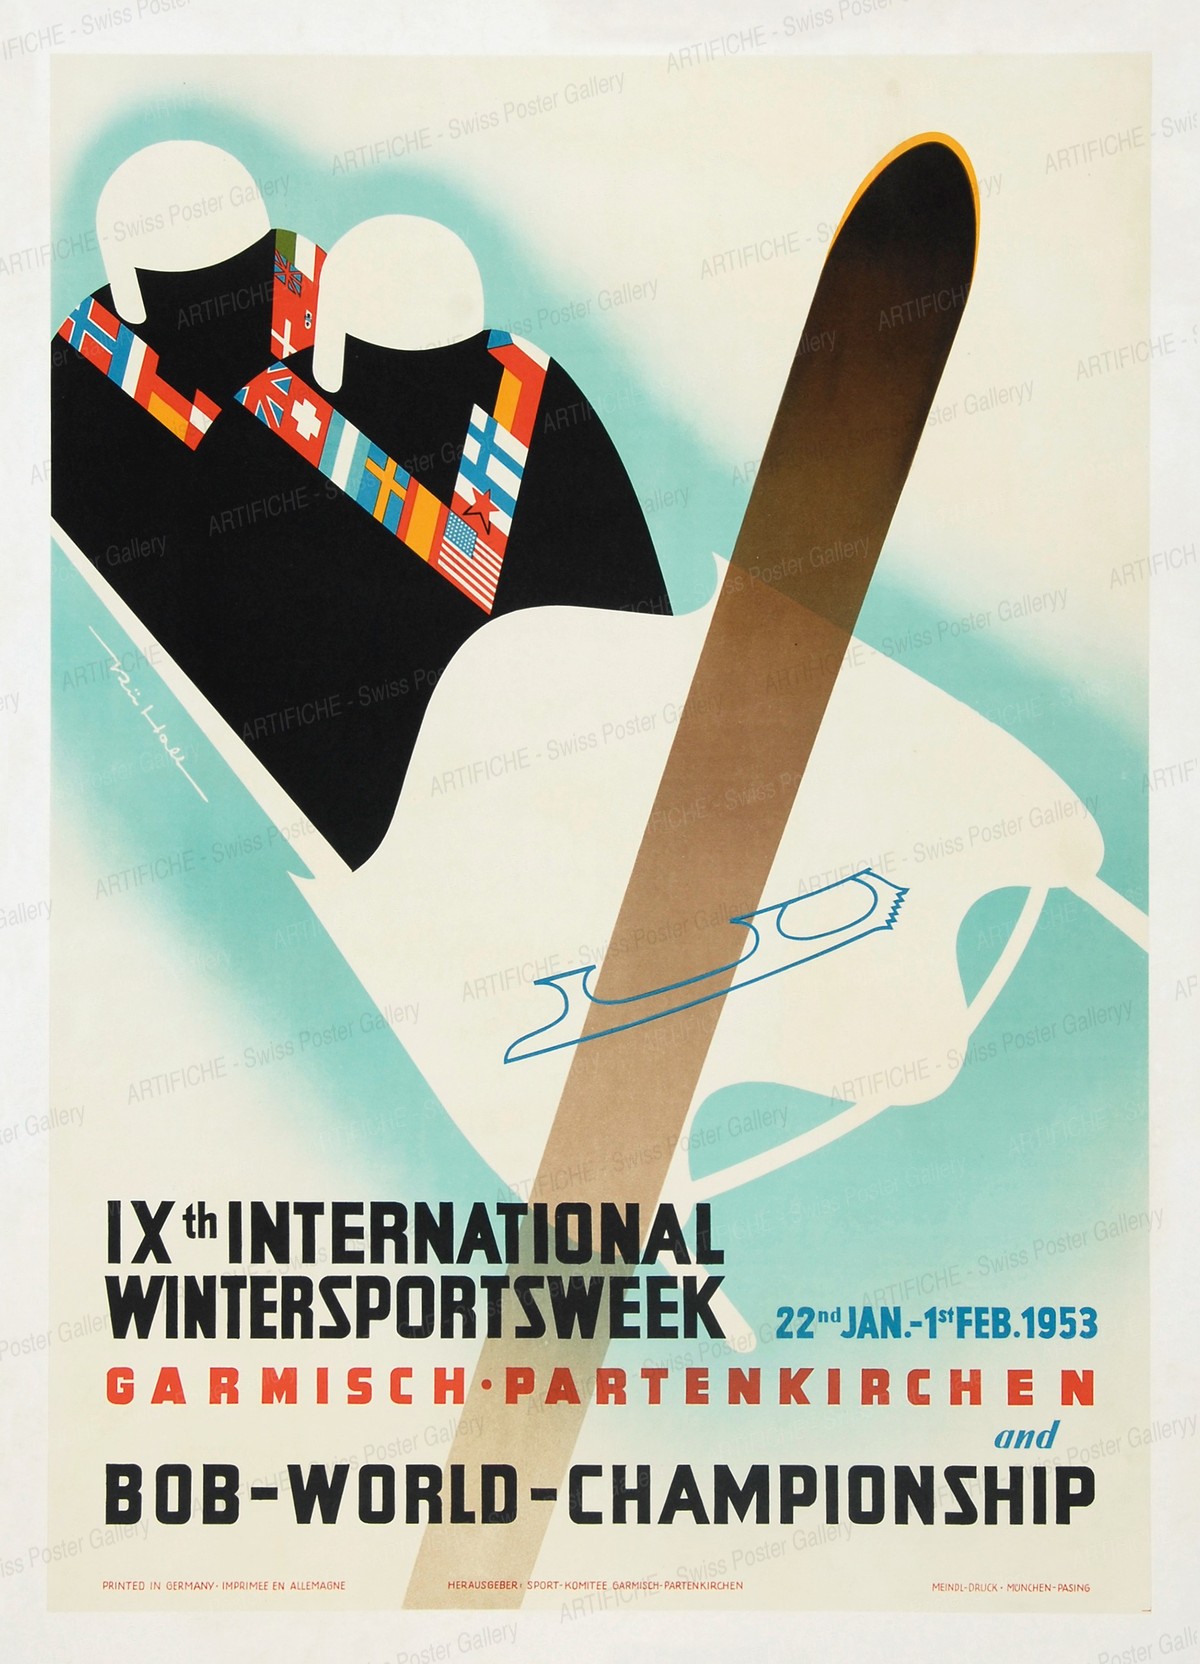 IXth International Wintersportsweek – BOB-WORLD-CHAMPIONSHIP 1953, Rüdiger Halt